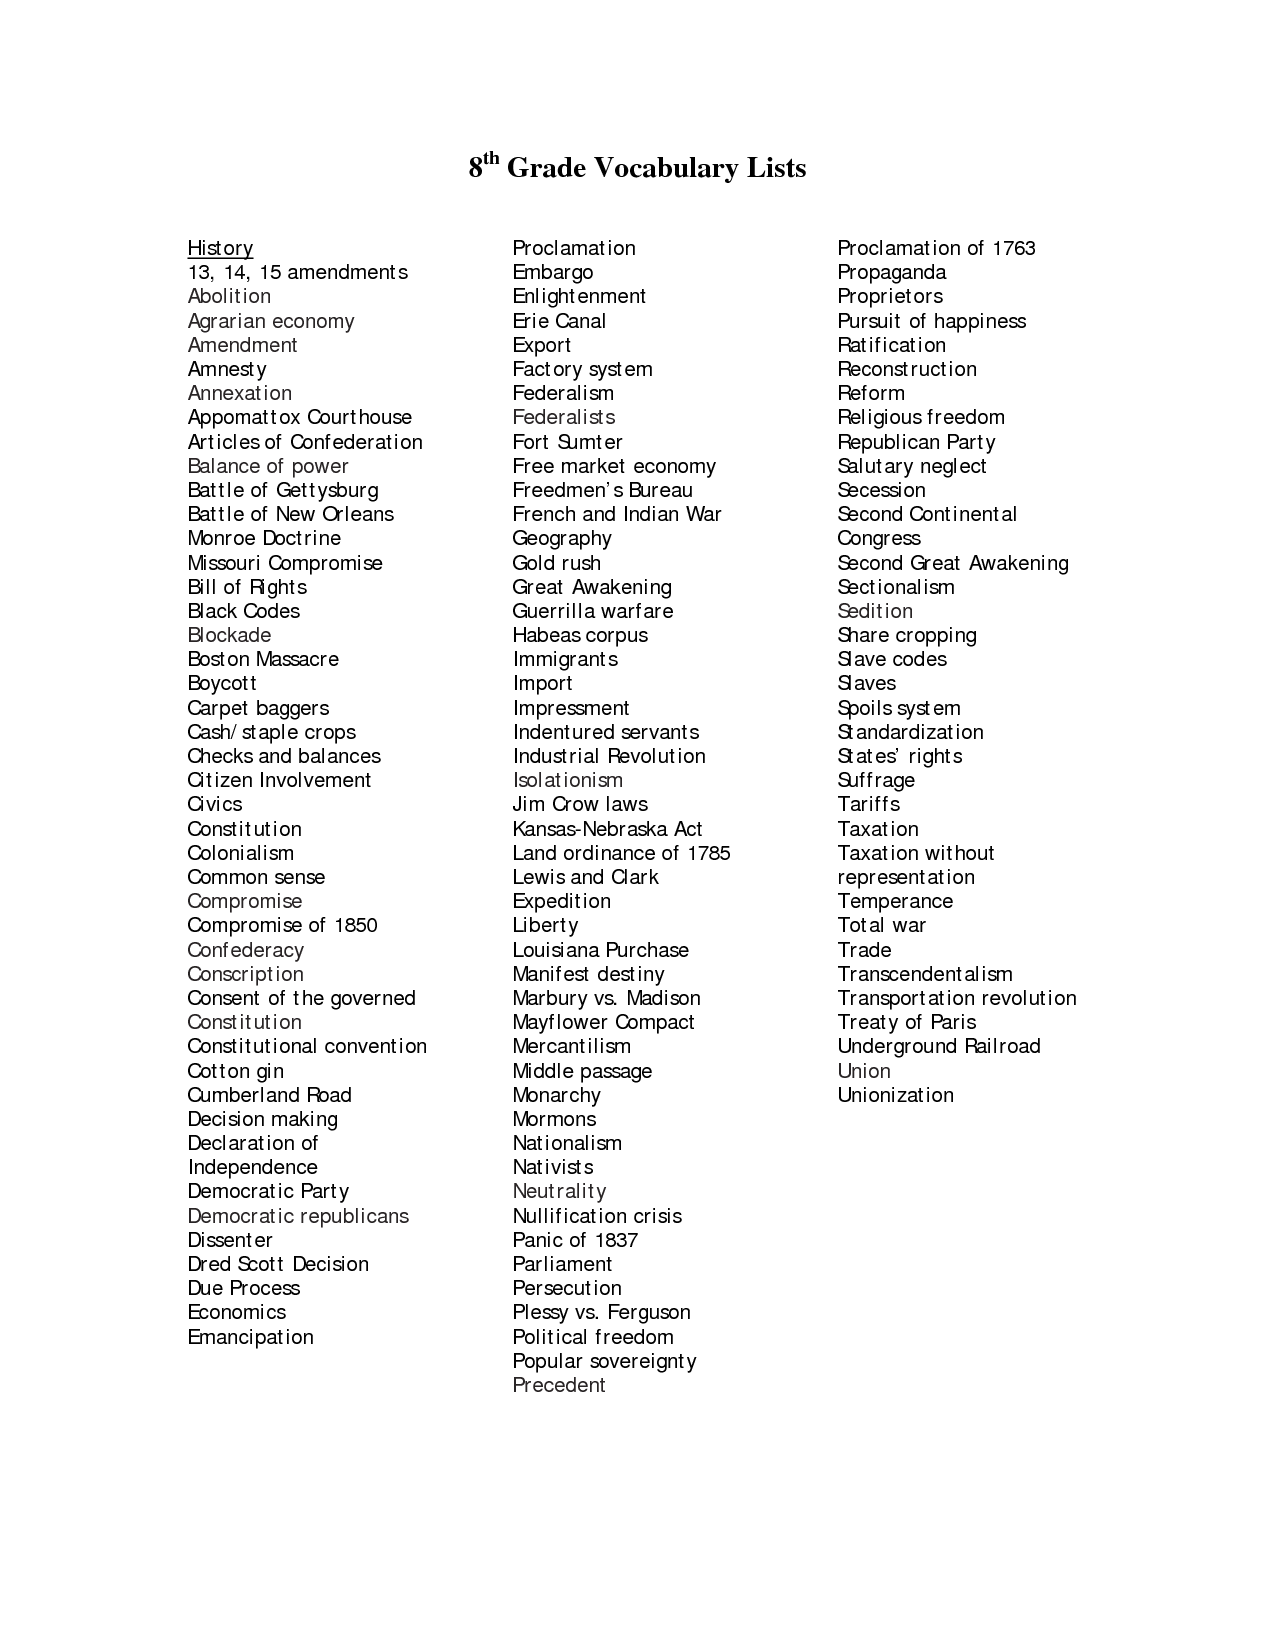 8th Grade Vocabulary Word List Image